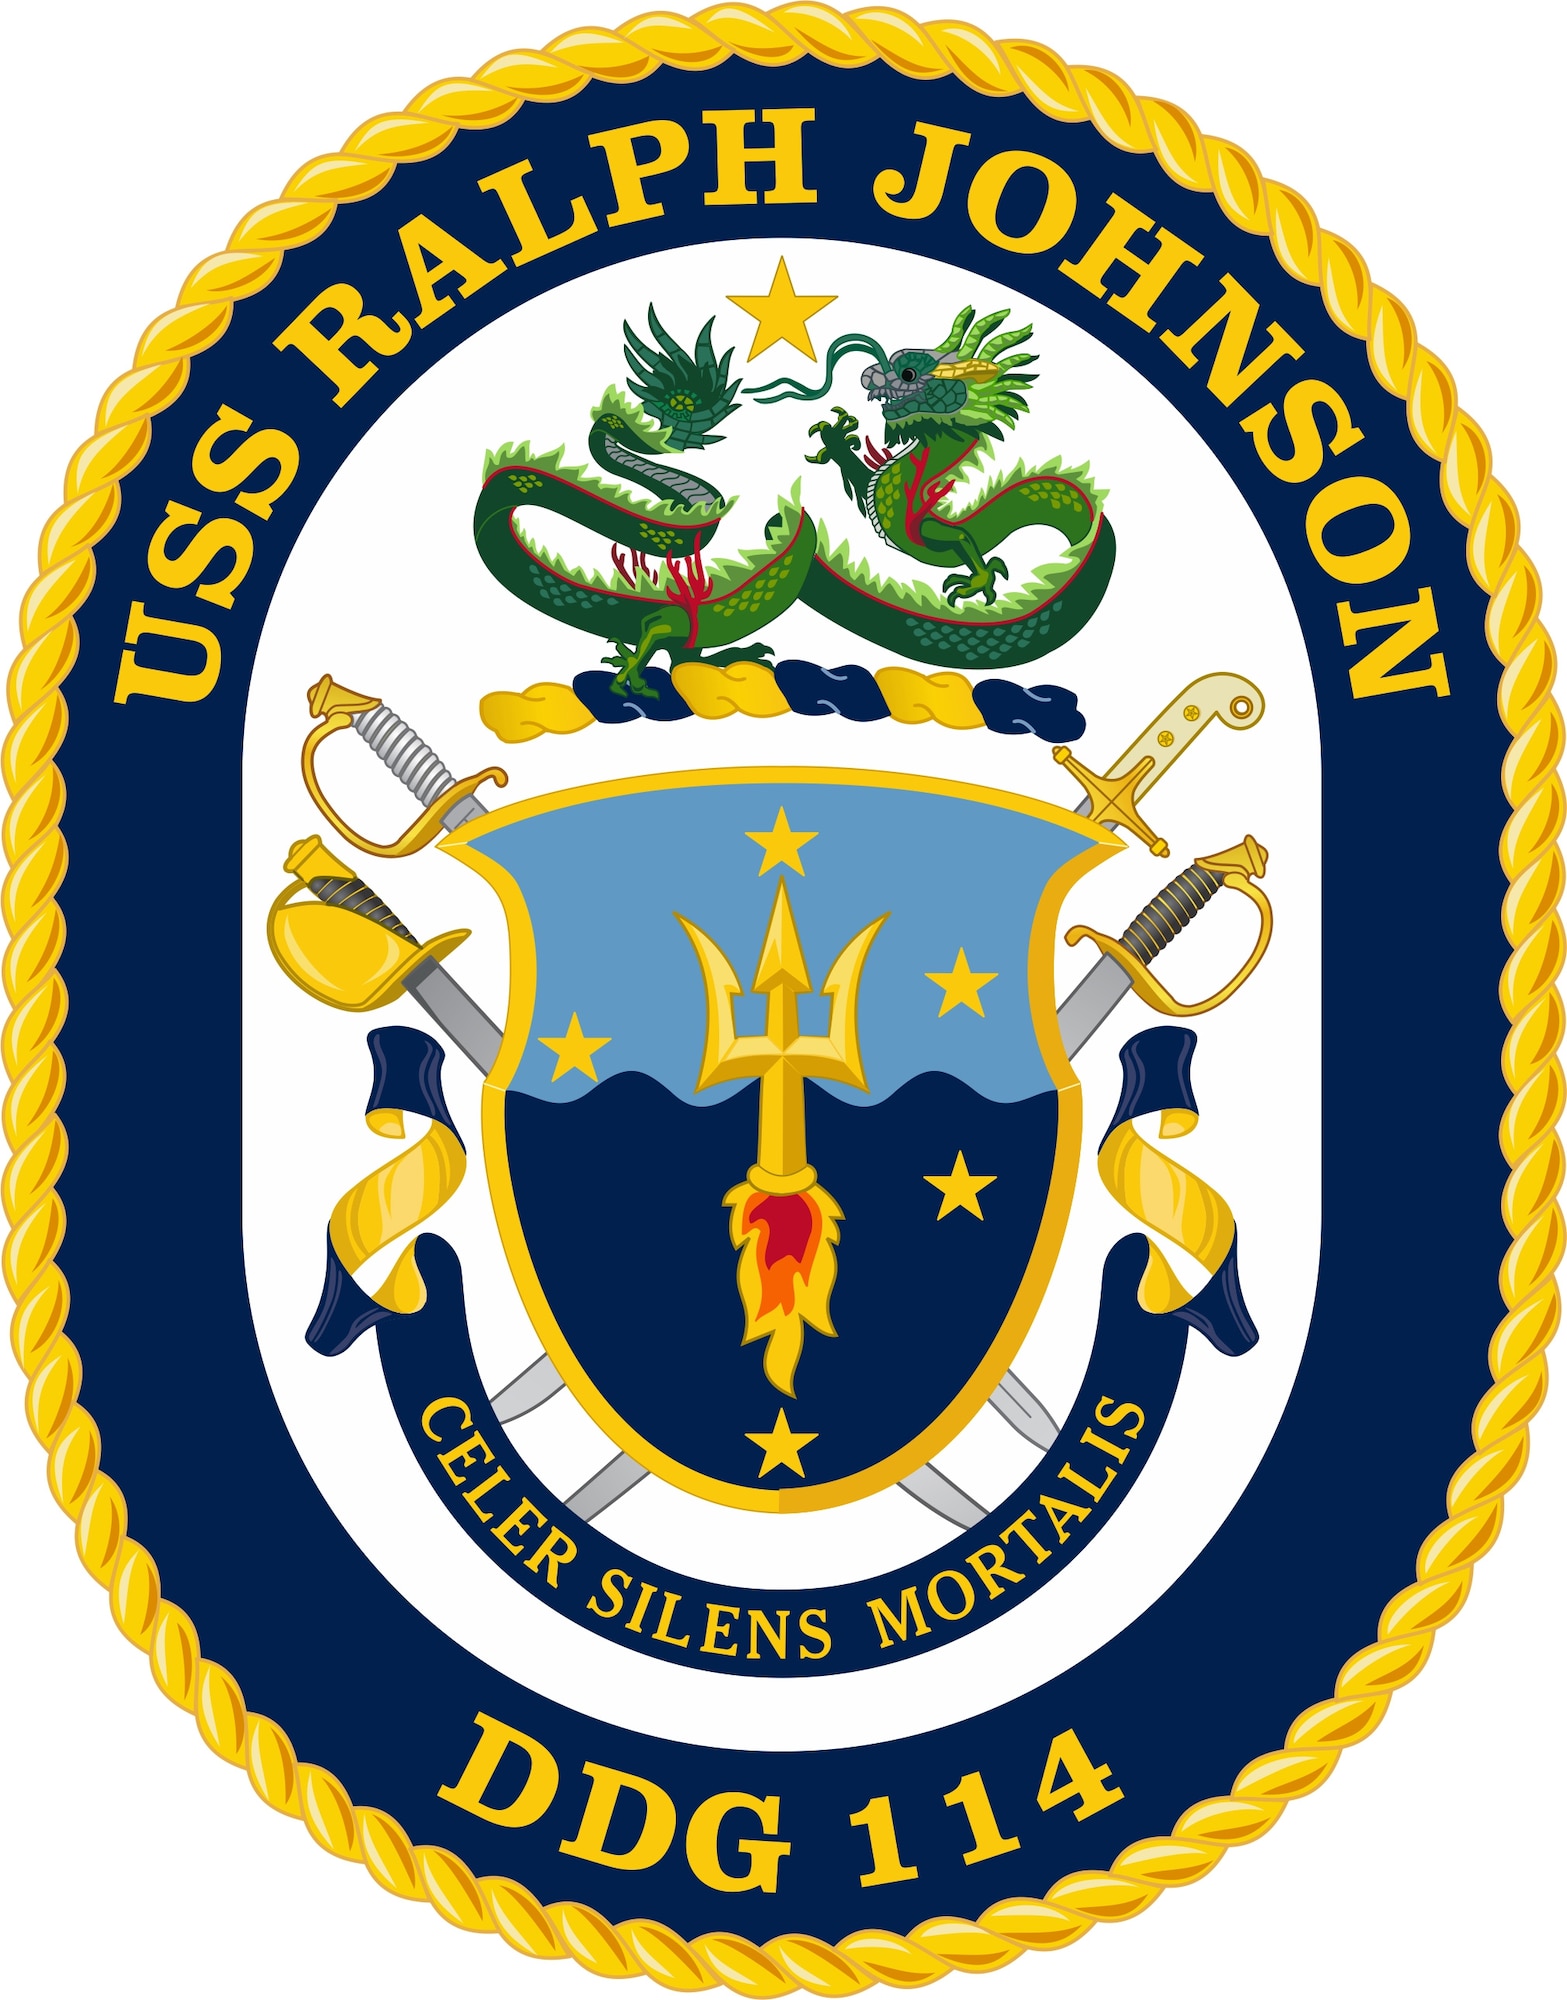 The seal of the USS Ralph Johnon.